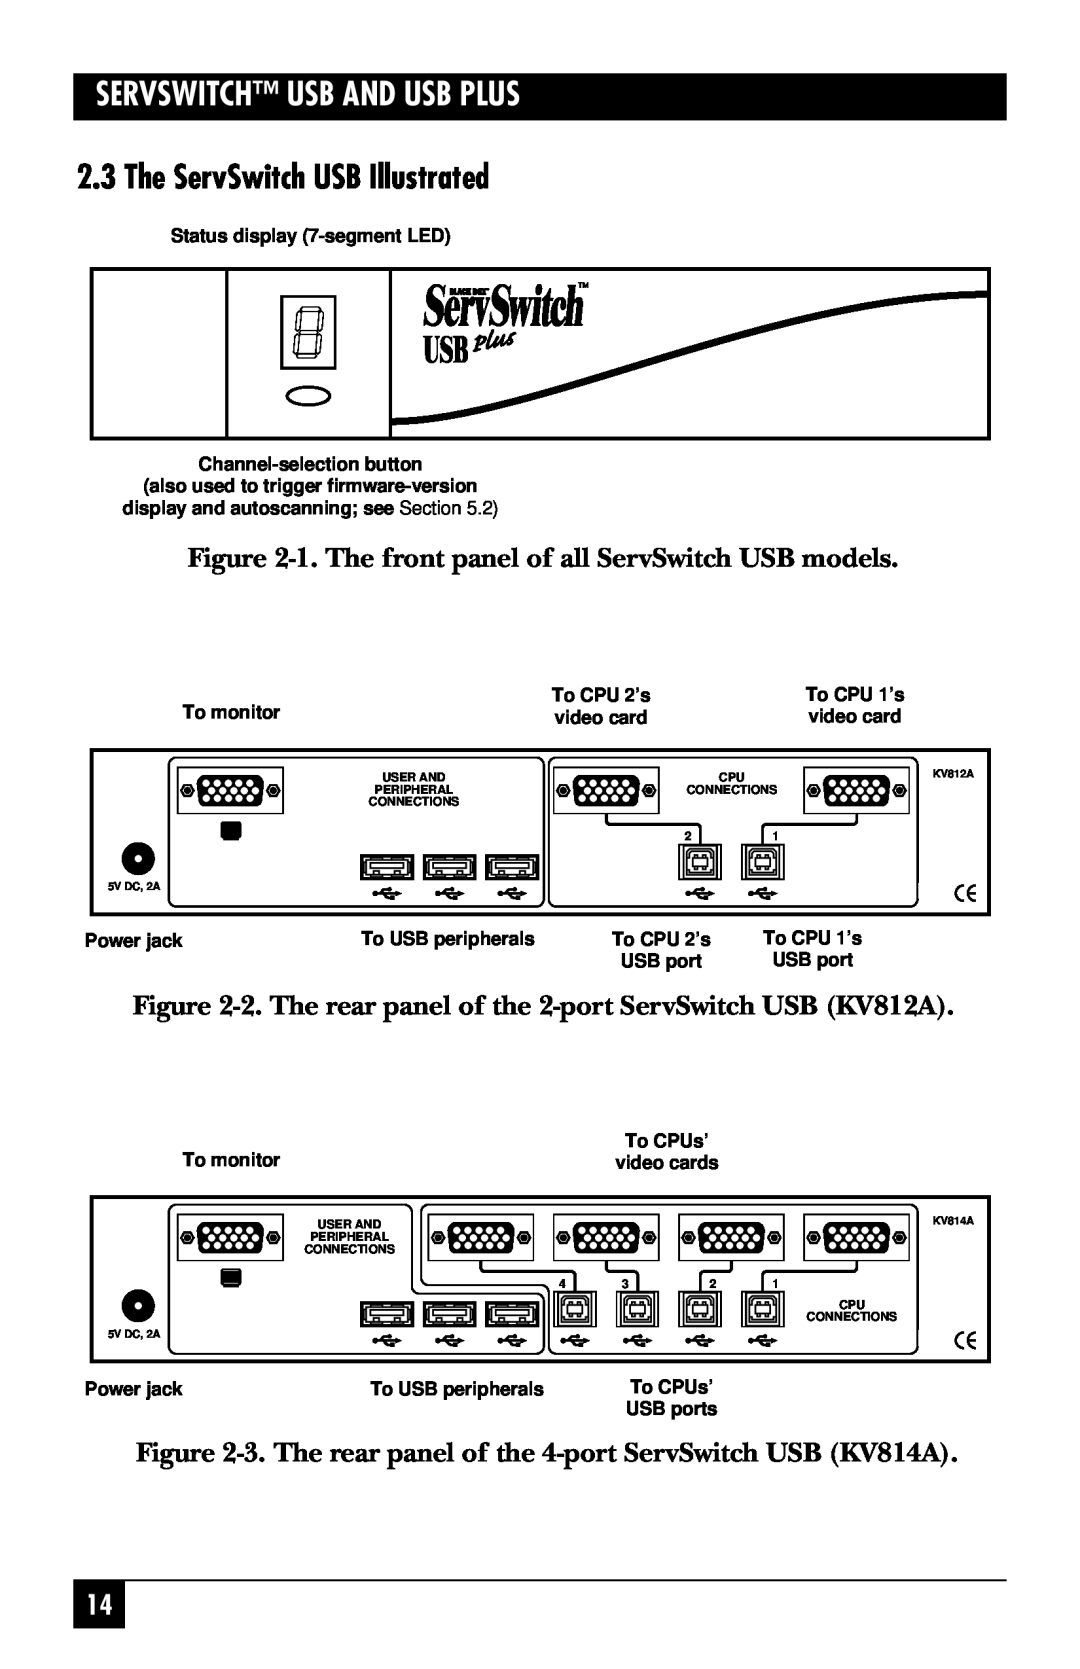 Black Box KV822A, KV812A manual The ServSwitch USB Illustrated, Servswitch Usb And Usb Plus 